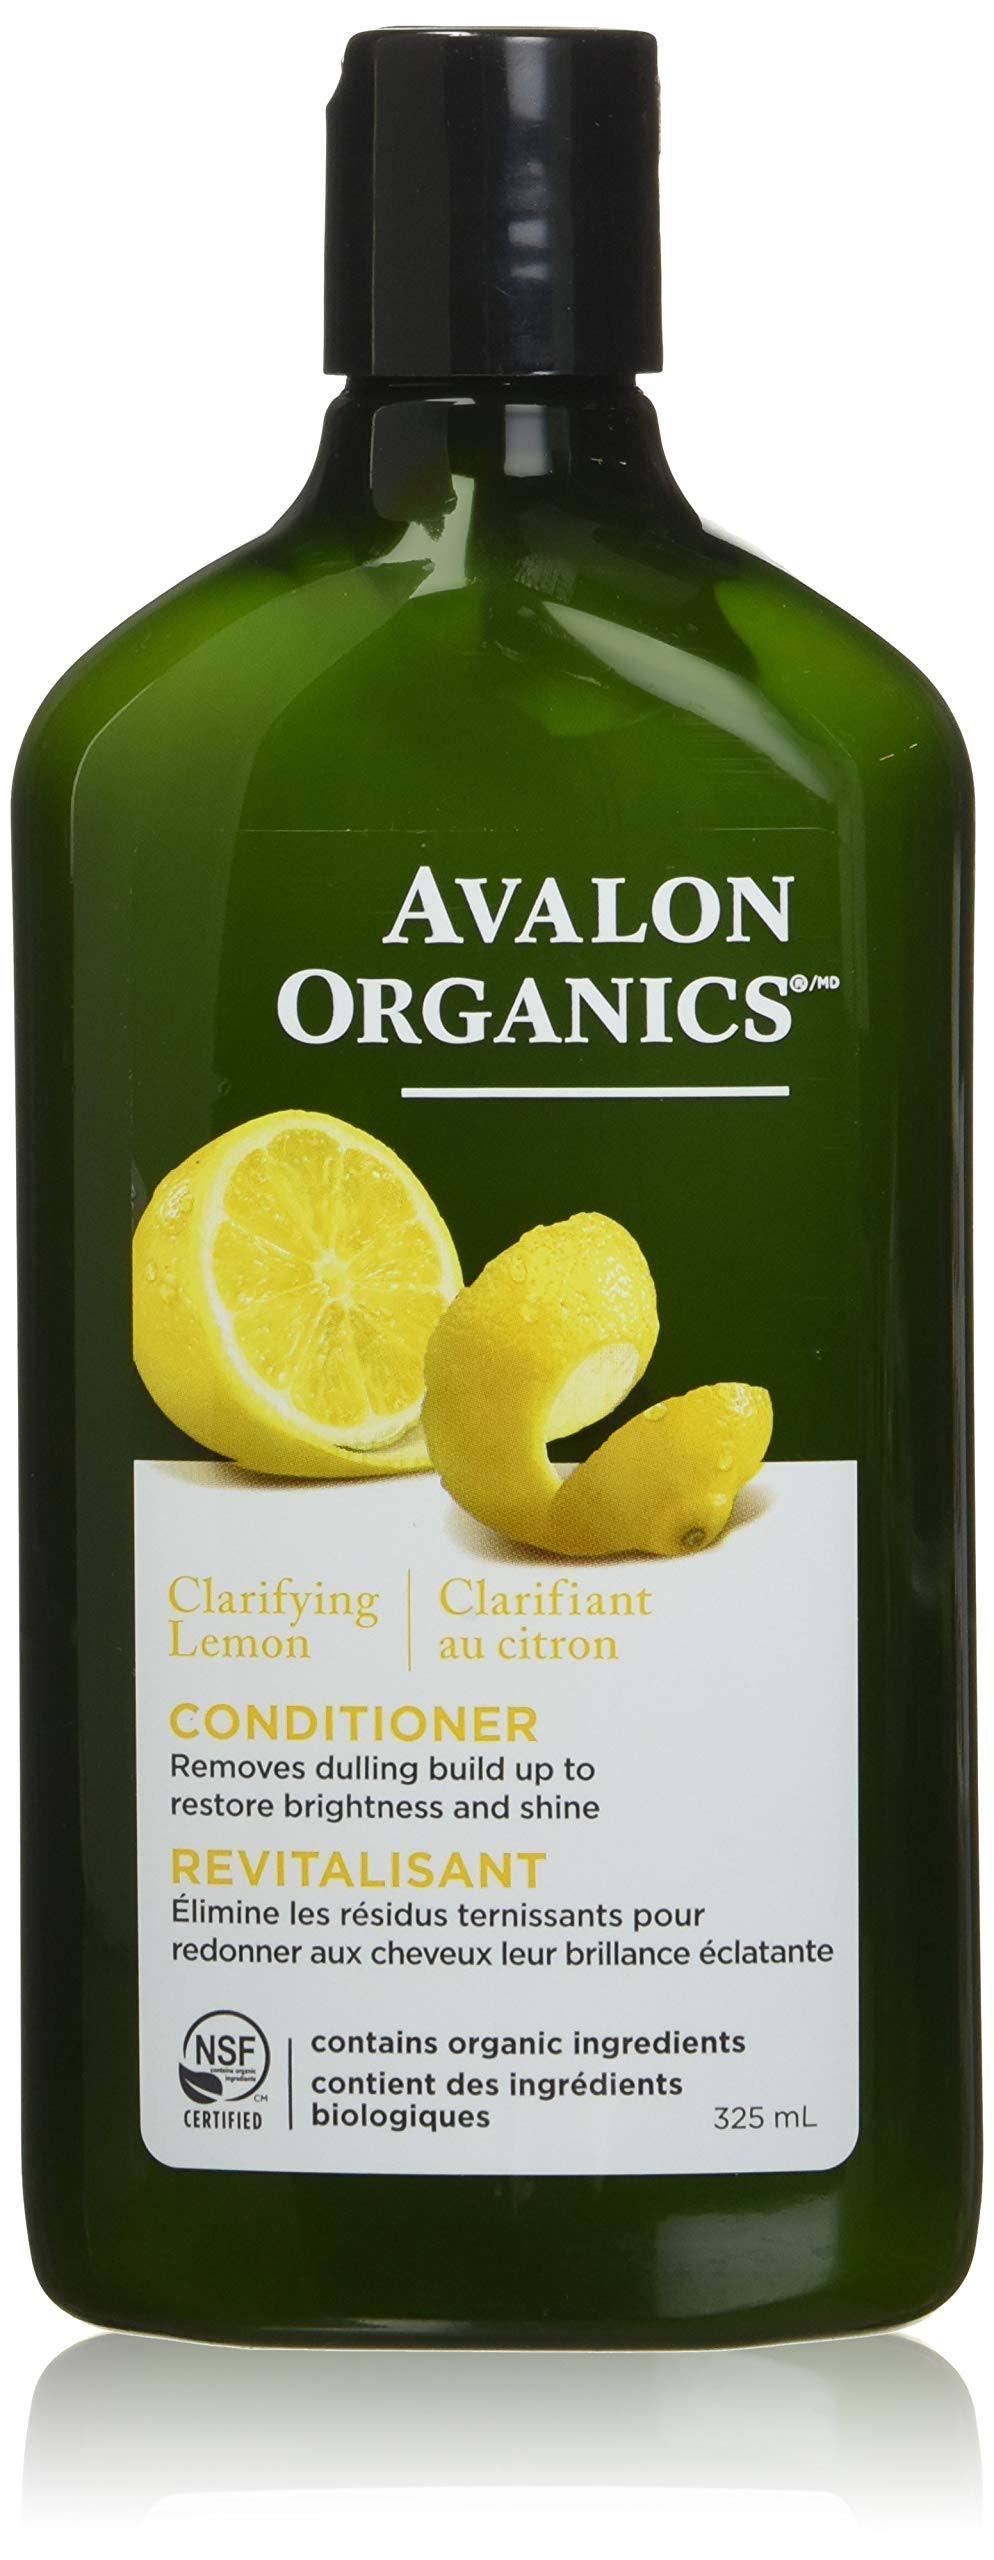 Avalon Organics Clarifying Conditioner, Lemon - 11 fl oz bottle